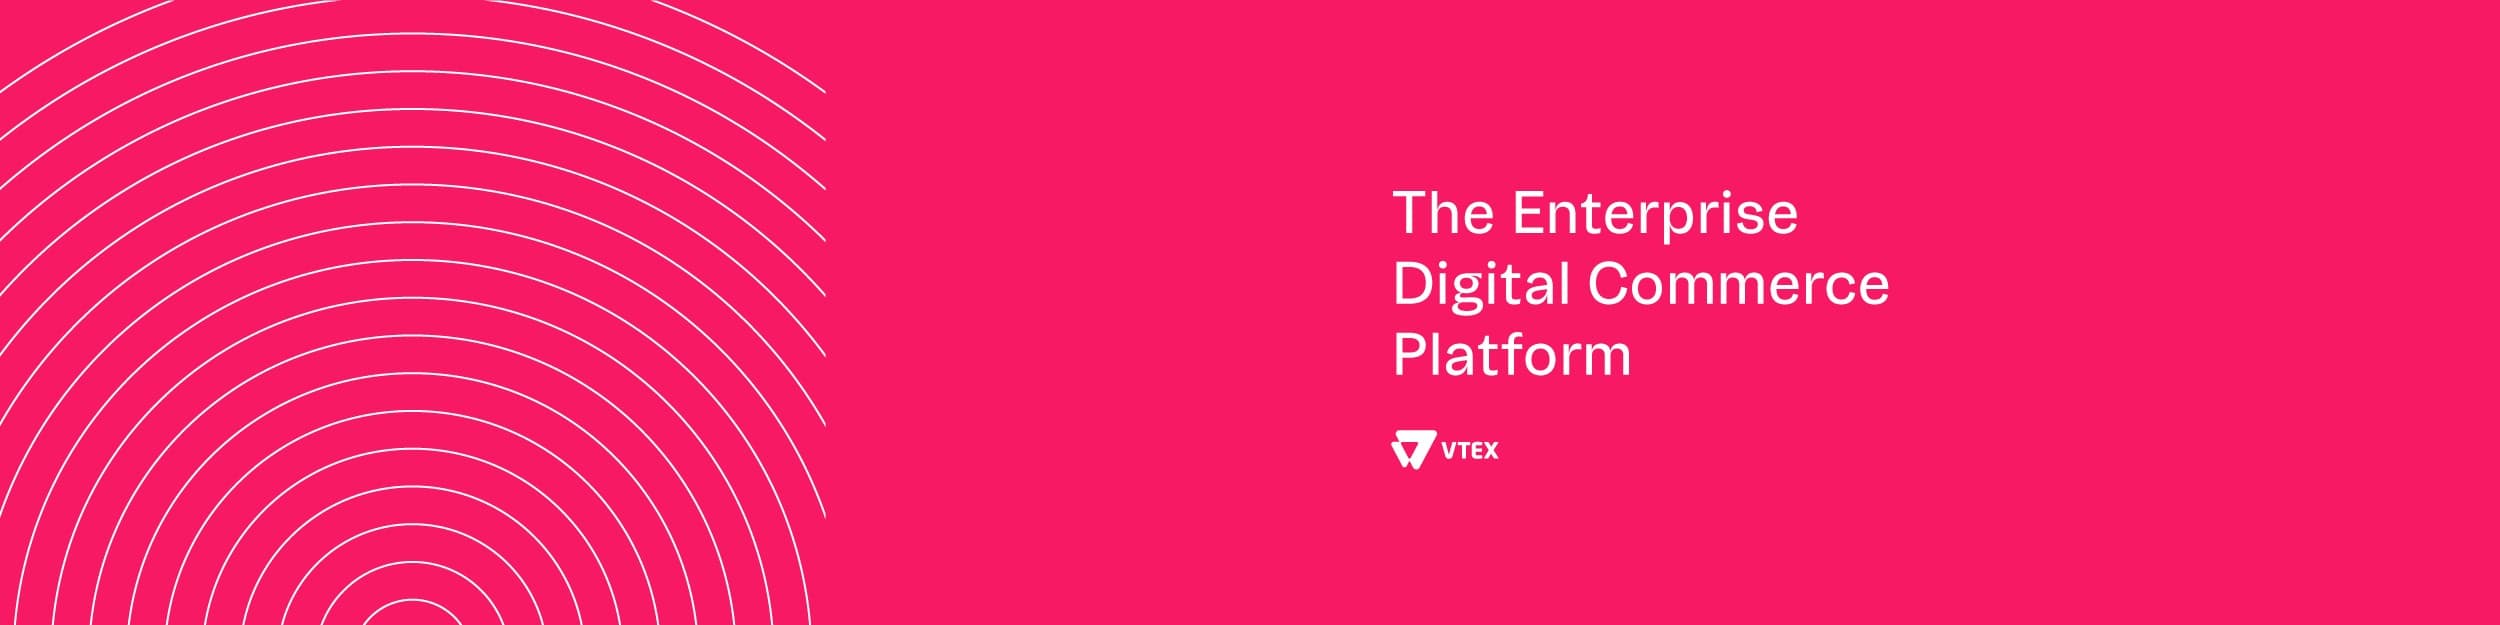 Banner rosa da Vtex com o slogan, the enterprise digital commerce platform.